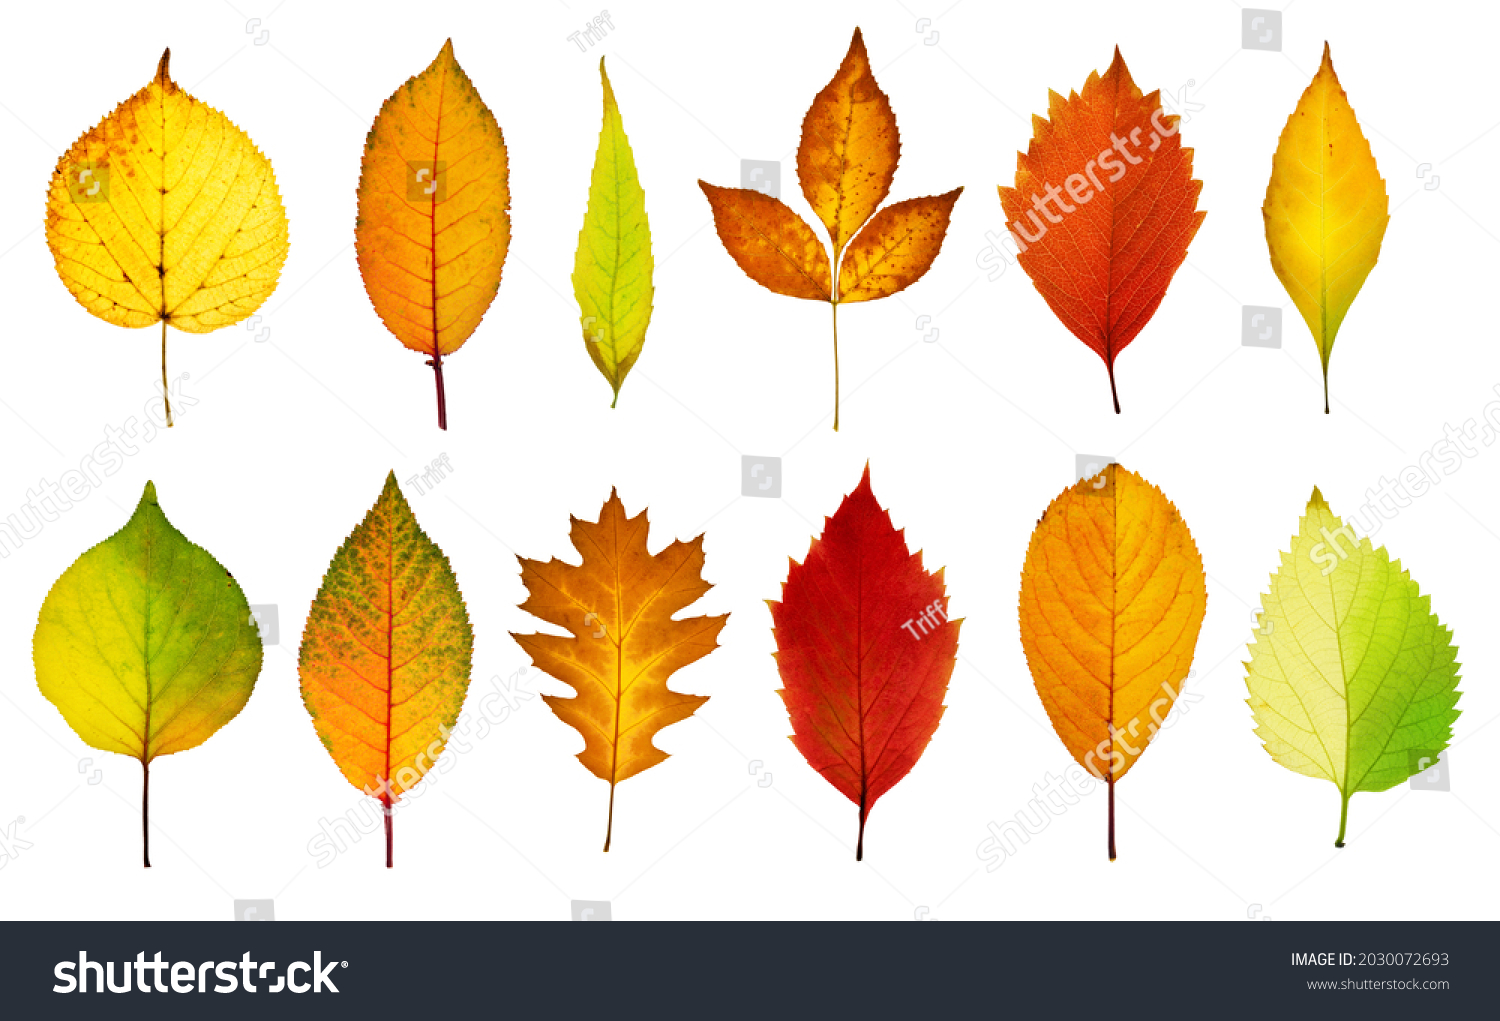 163 Torn Leaves Vine Images, Stock Photos & Vectors | Shutterstock